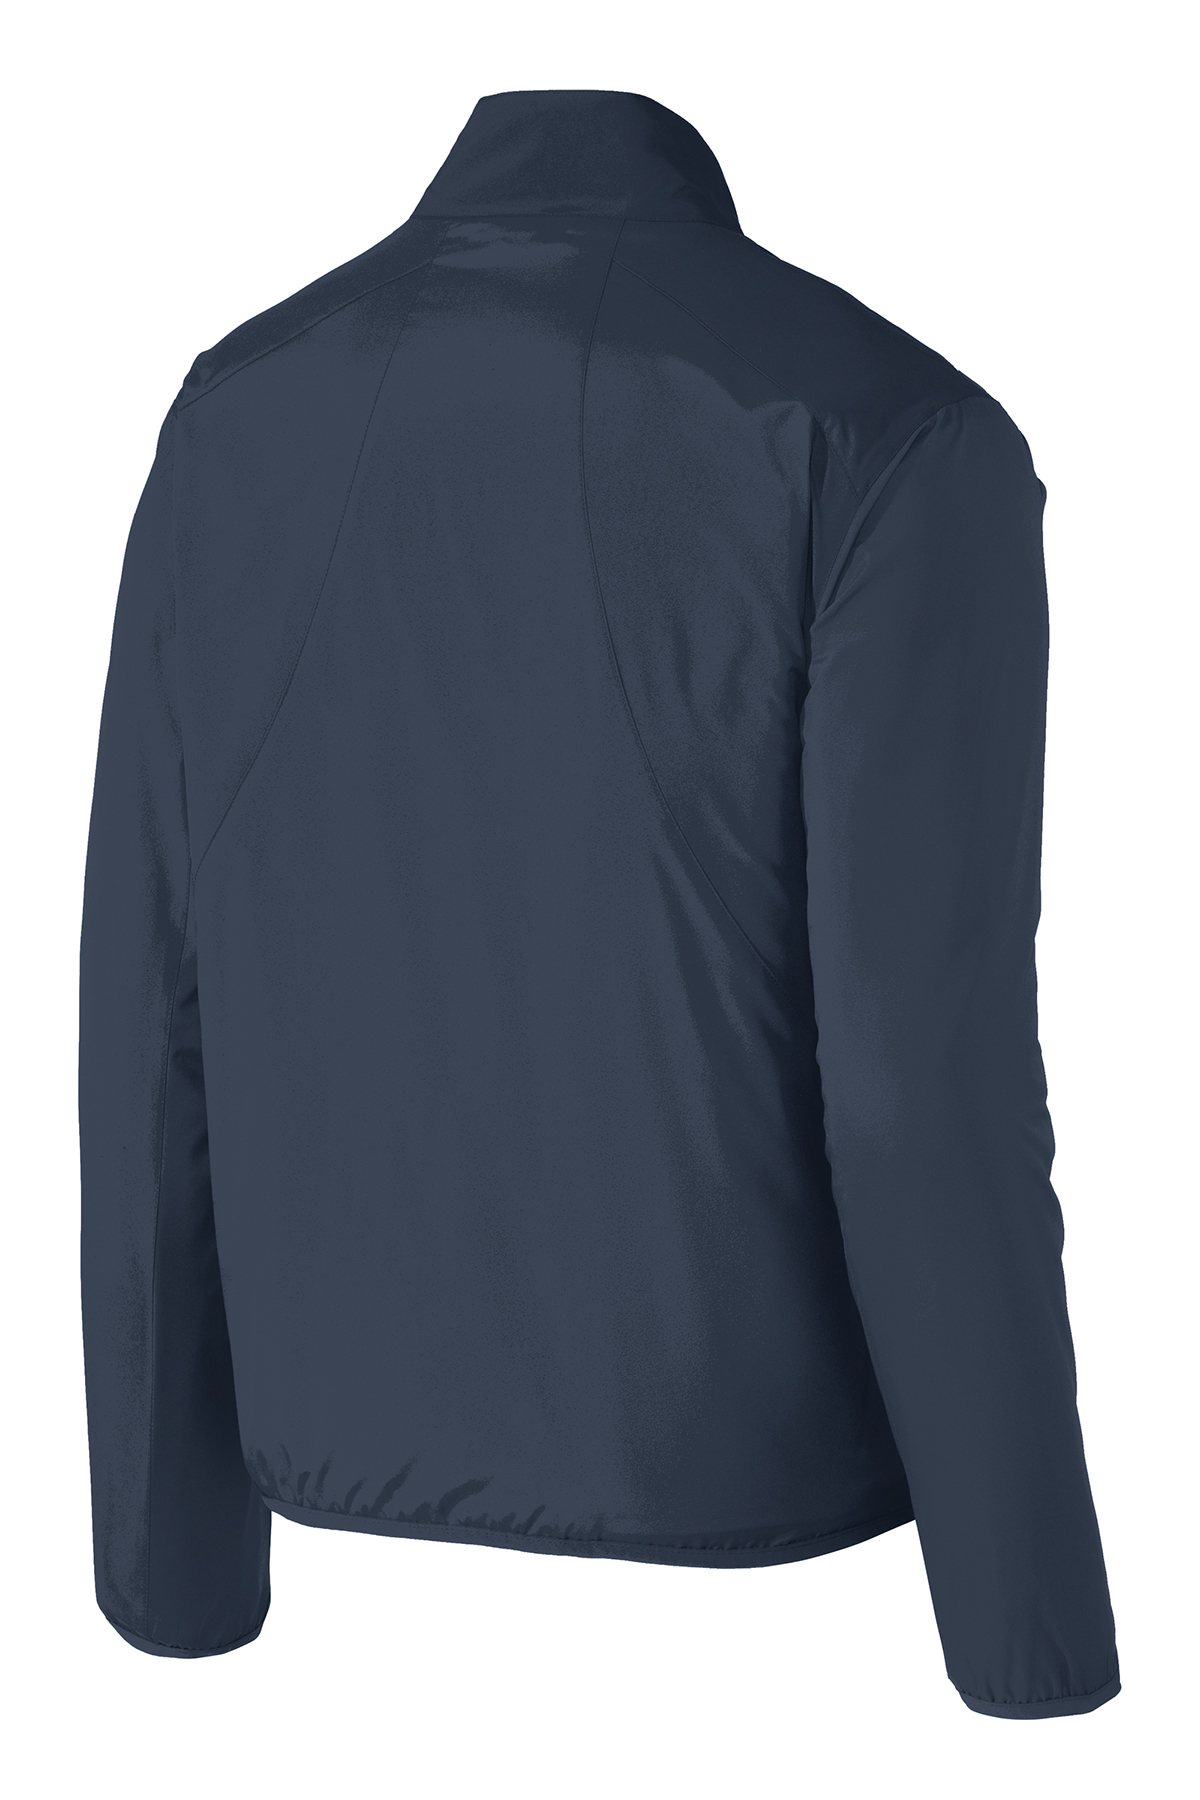 Port Authority Zephyr Full-Zip Jacket | Product | Port Authority